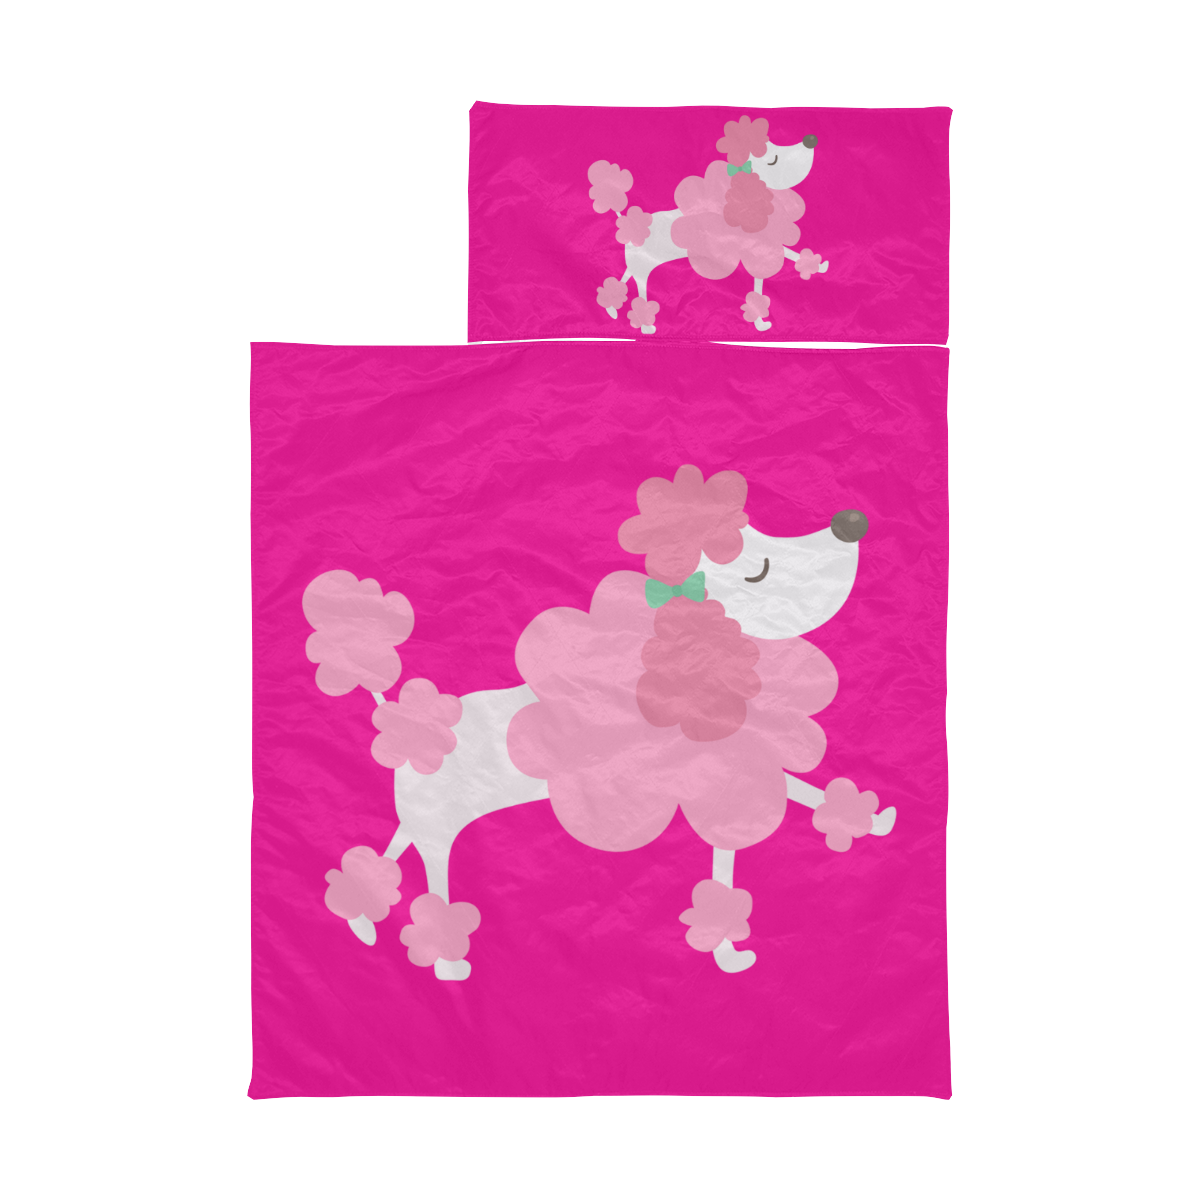 Pretty Pink Poodle Hot Pink Kids' Sleeping Bag